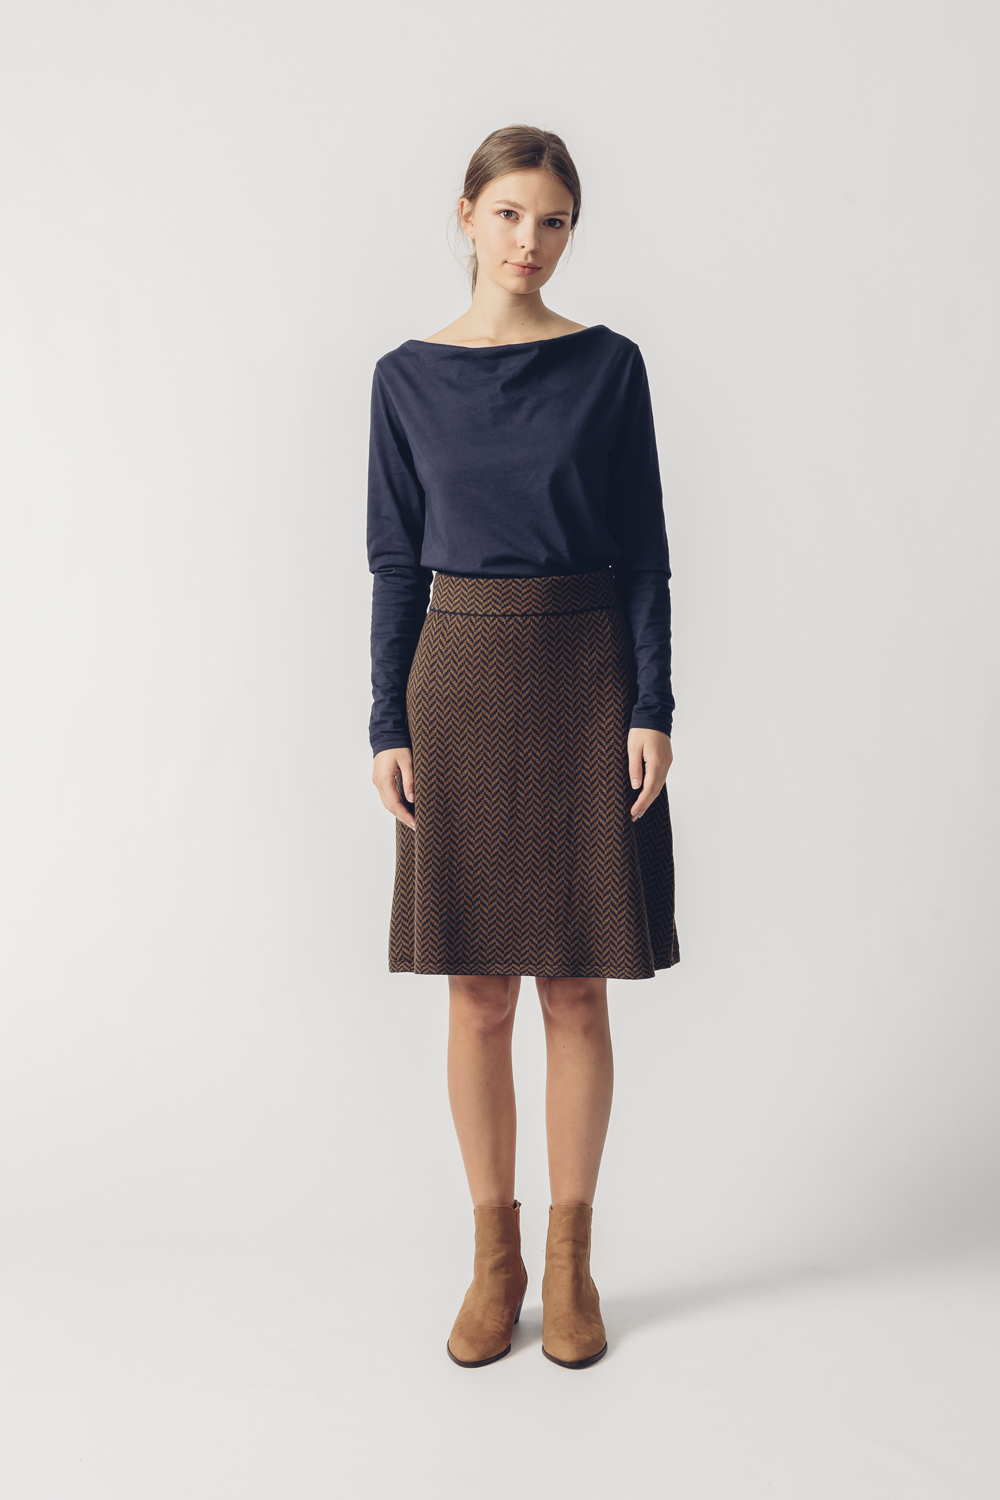 Arane Short Women Skirt dark blue/brown